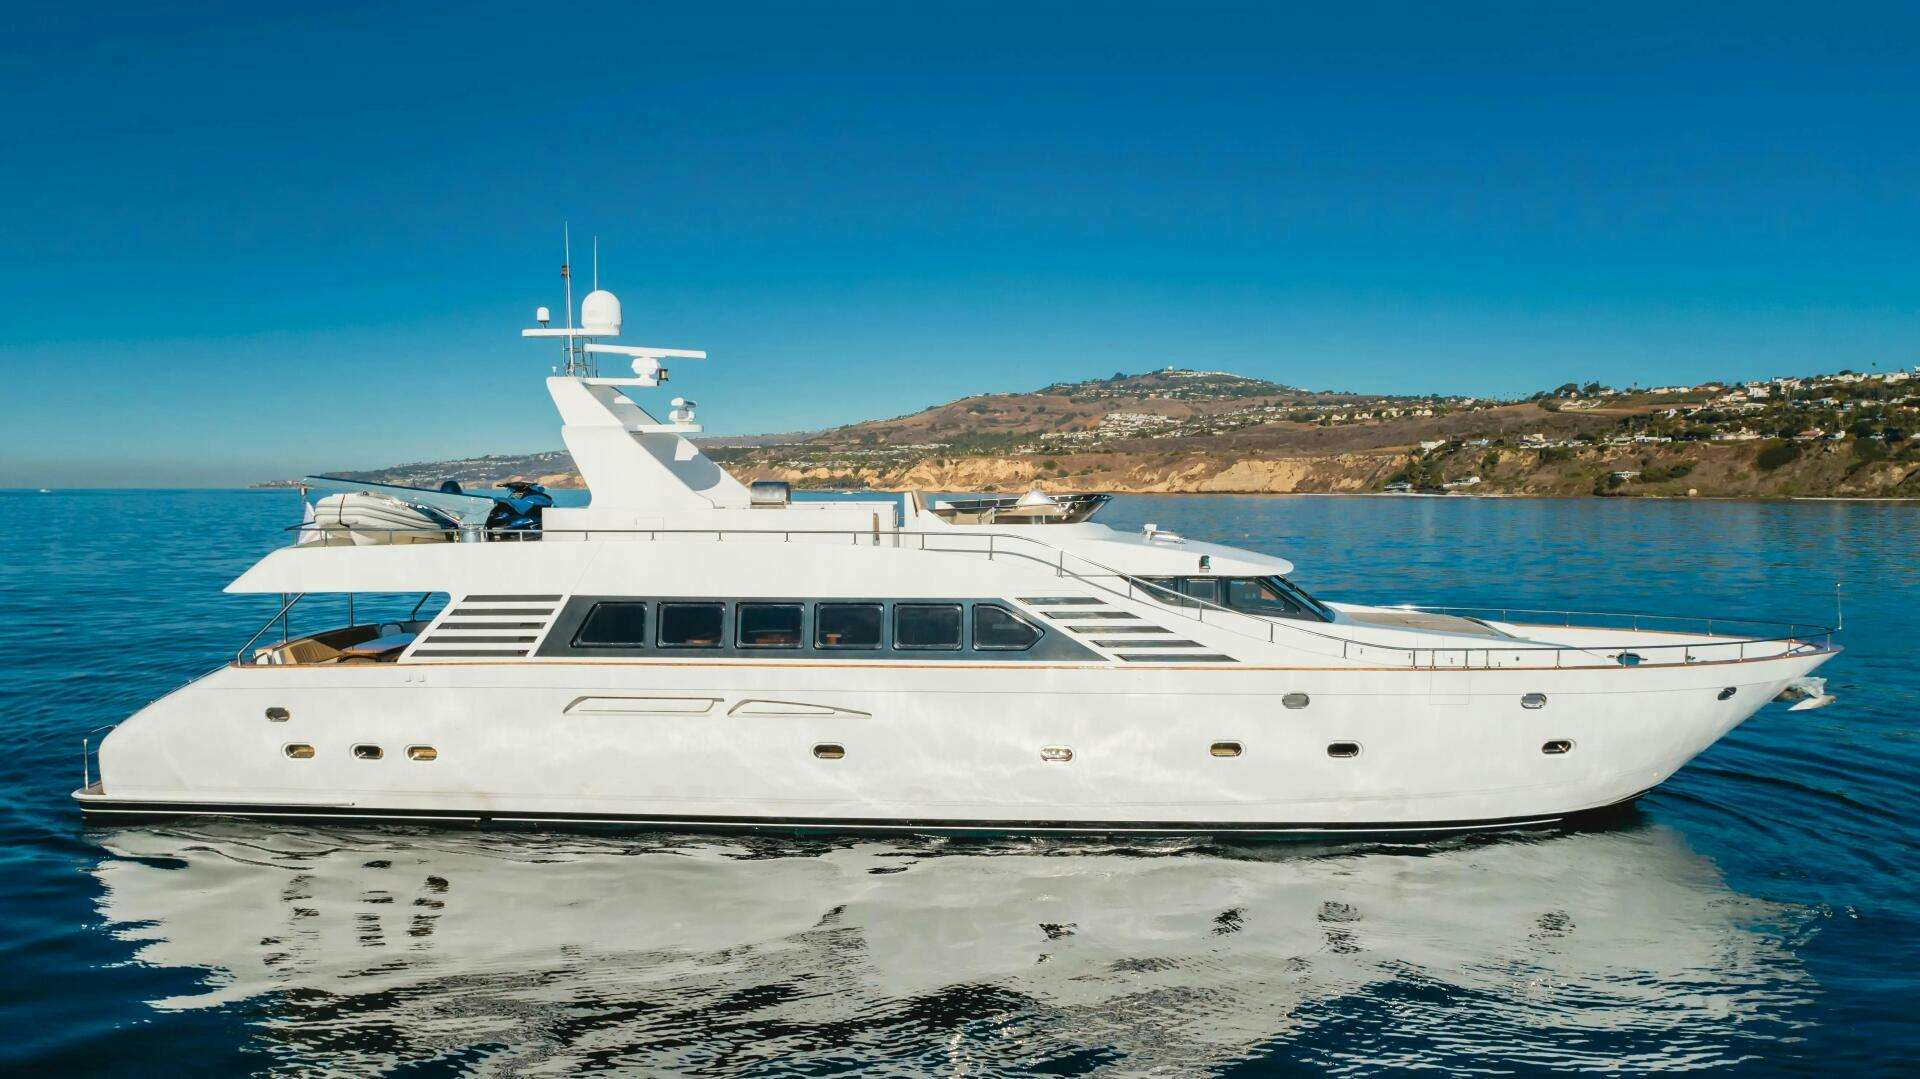 Money cat
Yacht for Sale